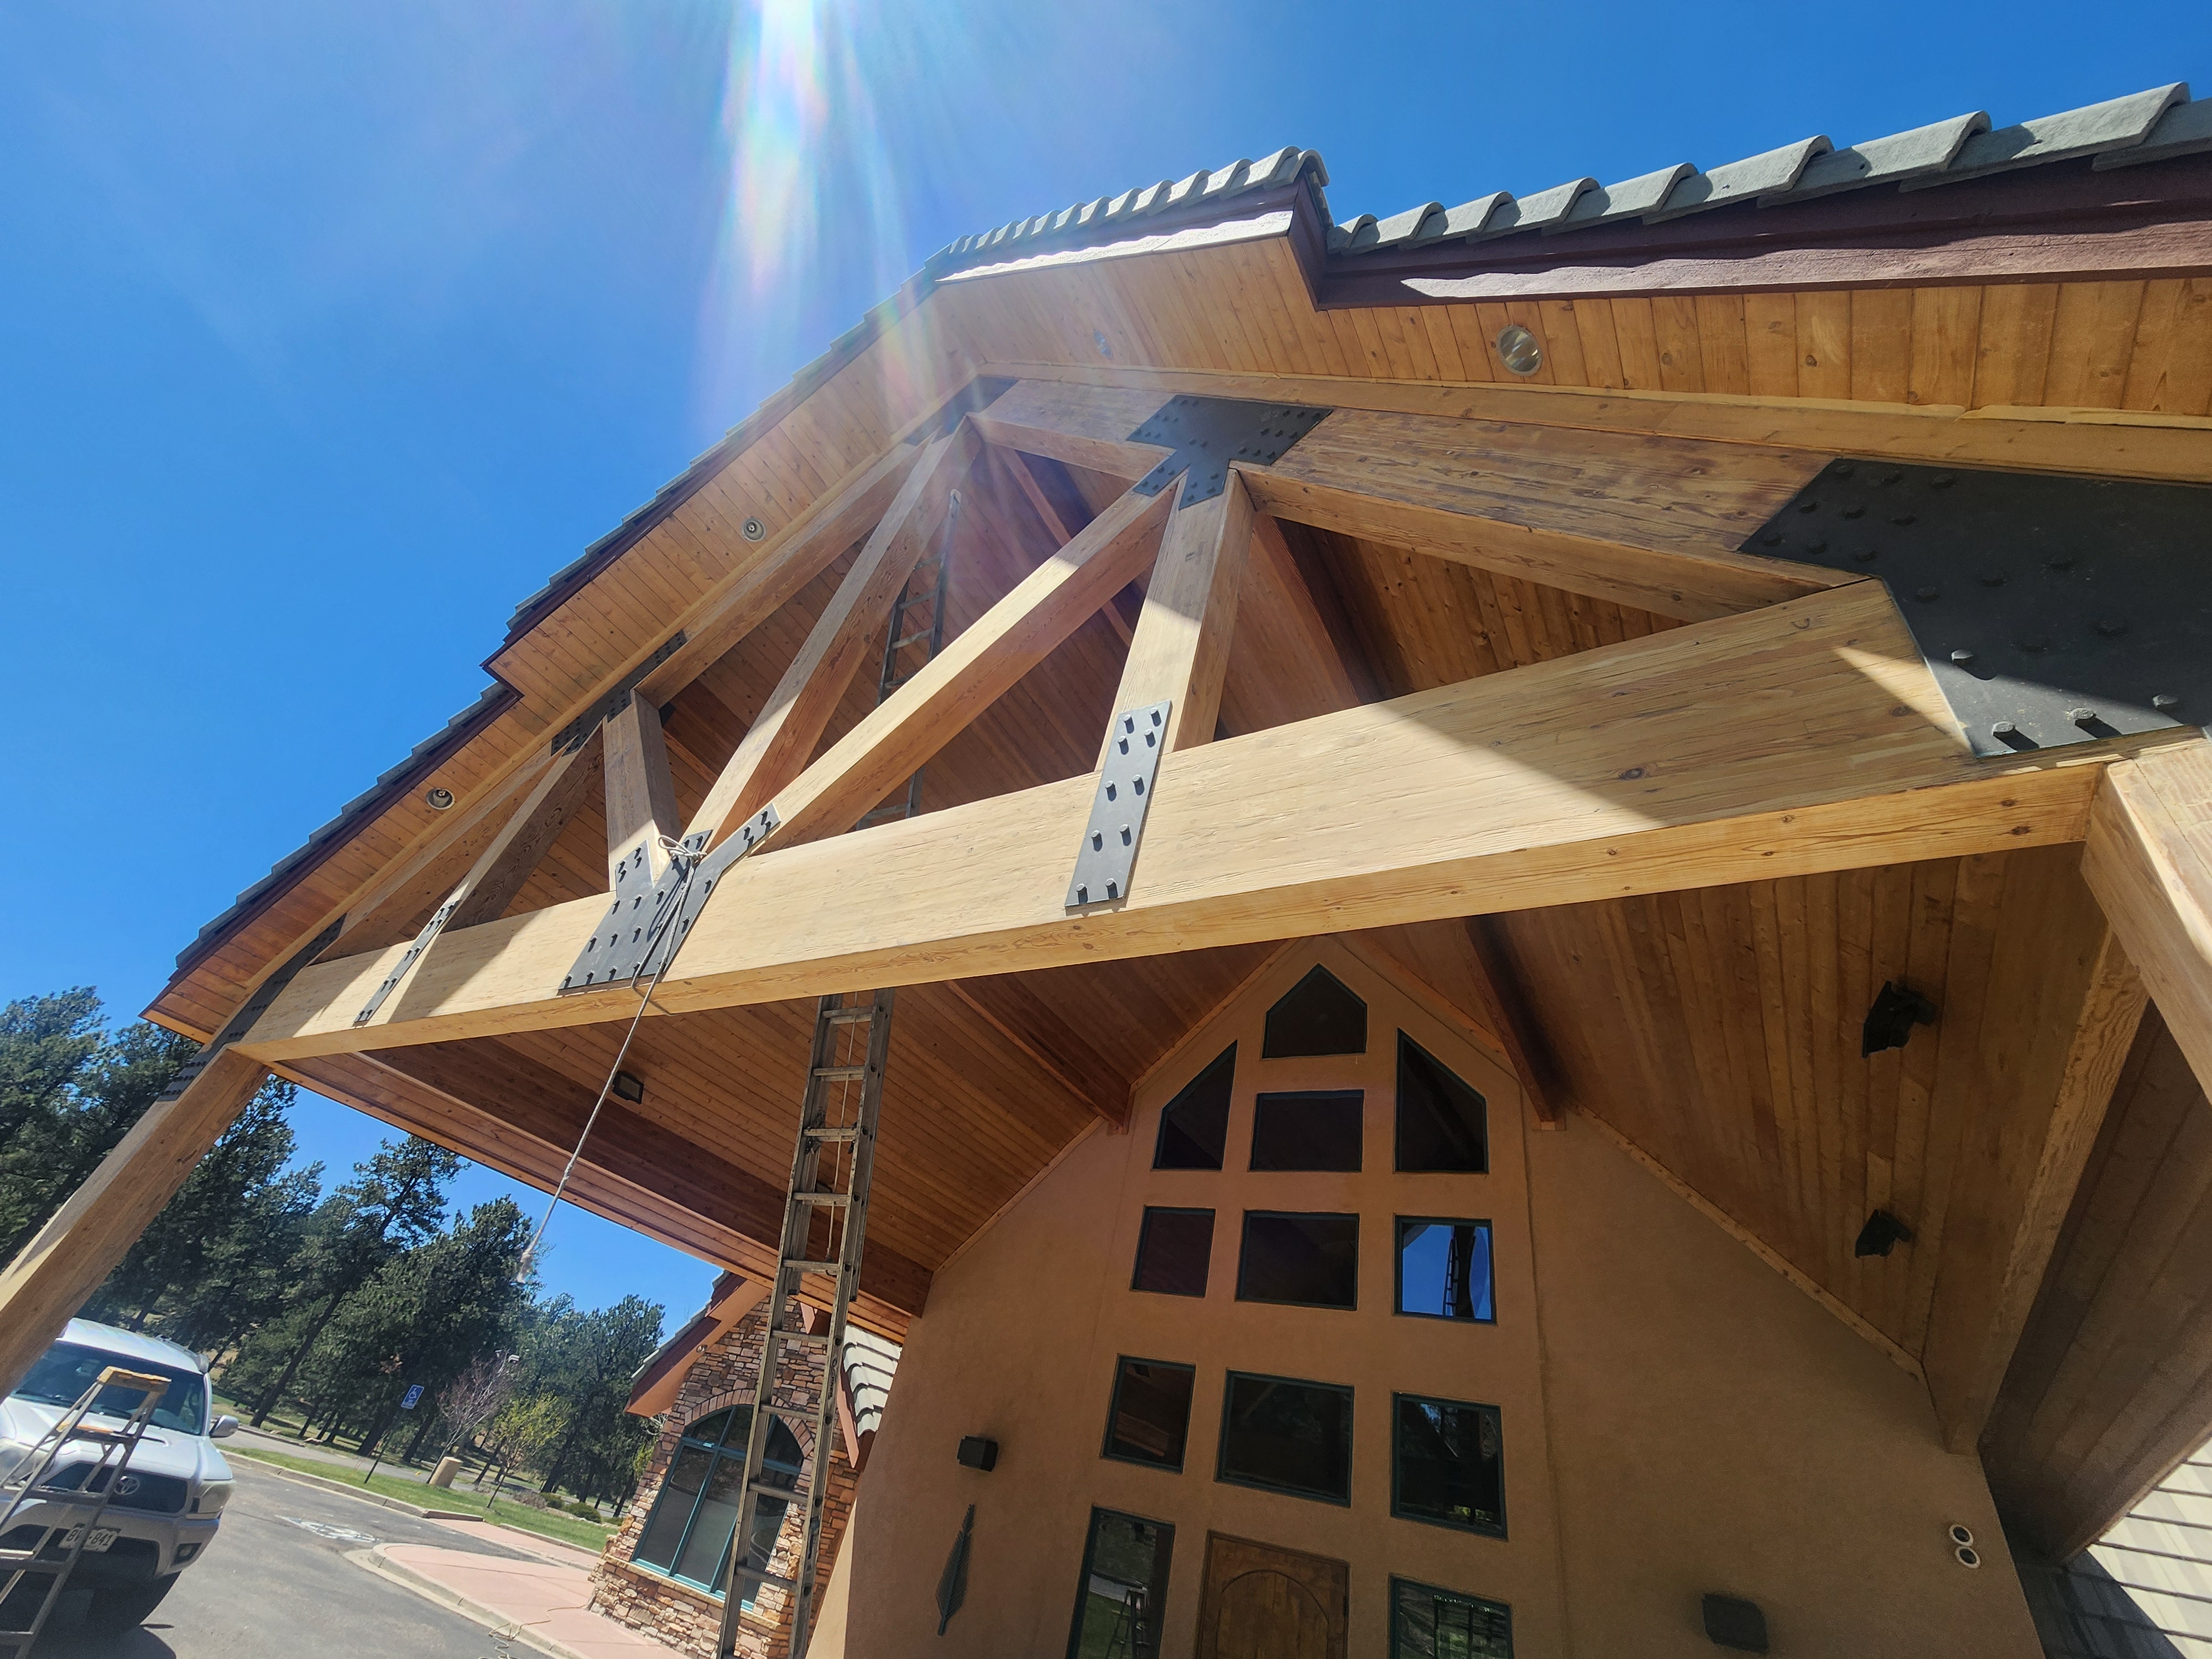 Image of Lodge exterior varnish. Image shows close up of cross beams and blue skies.